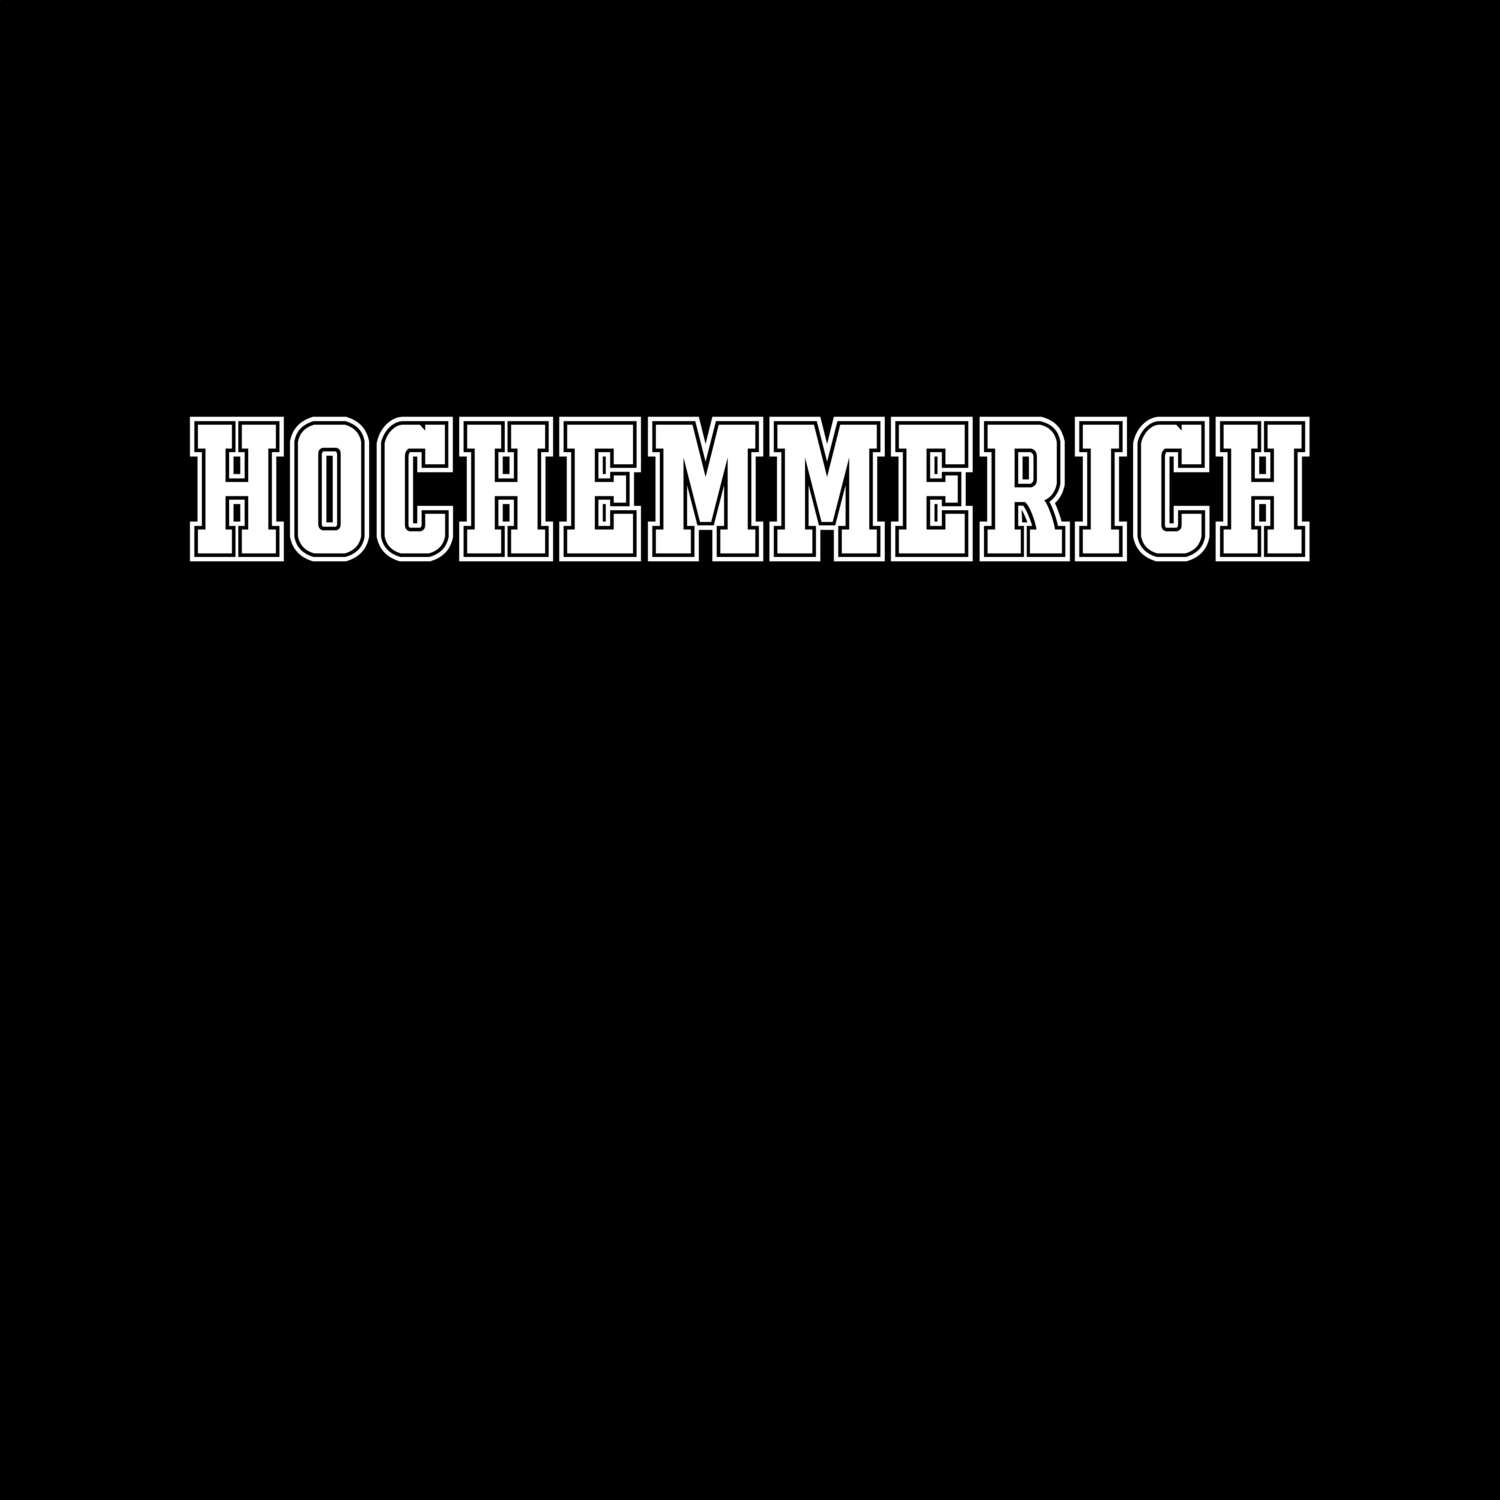 Hochemmerich T-Shirt »Classic«